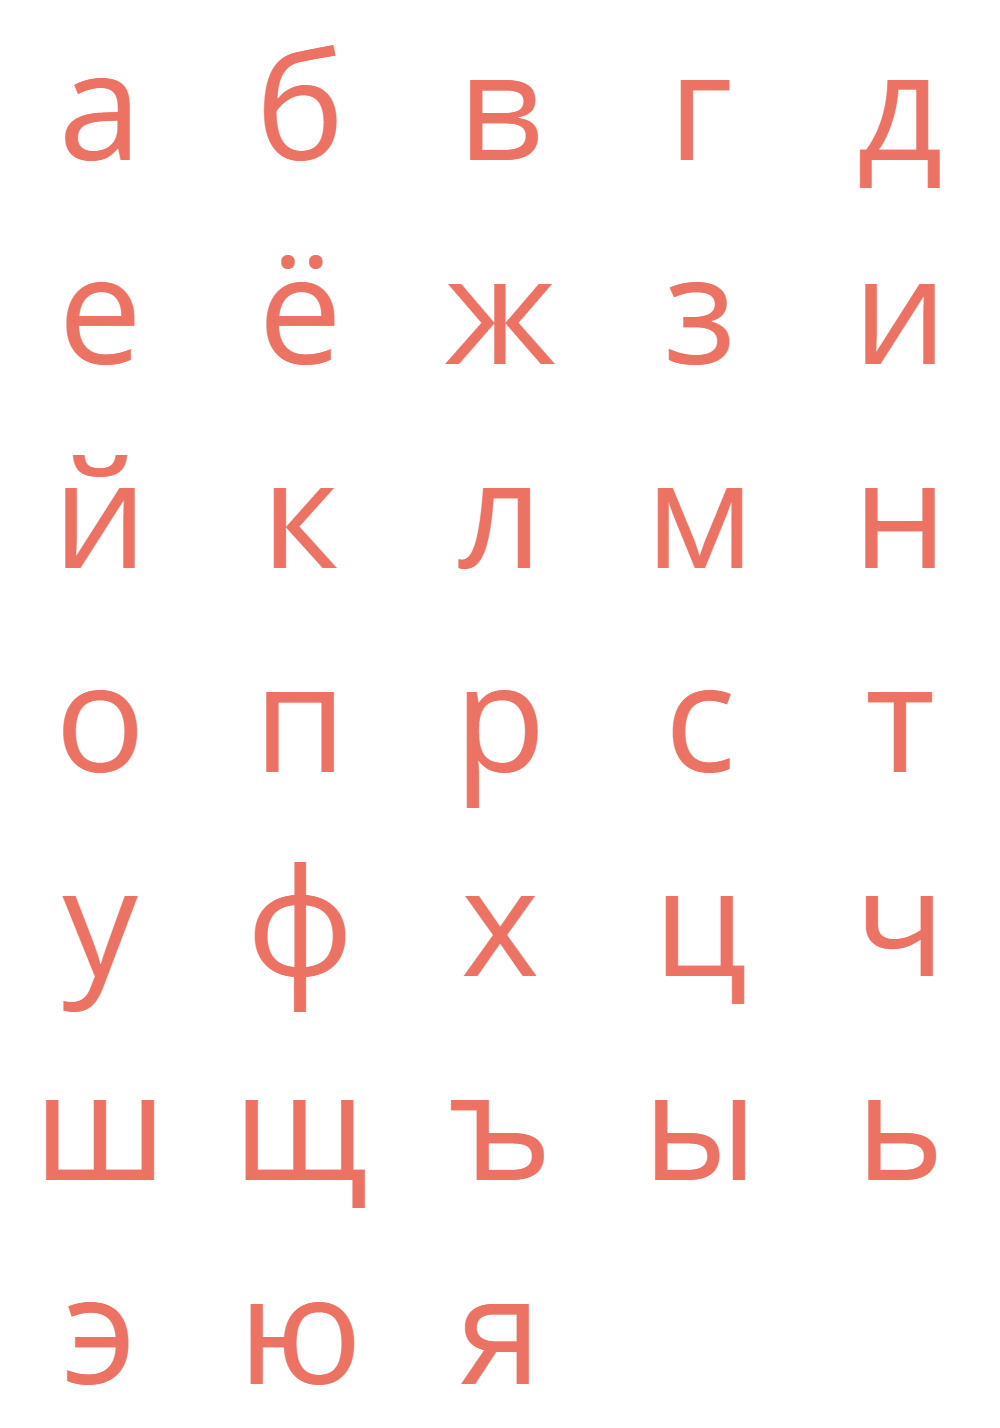 Печатные буквы алфавита